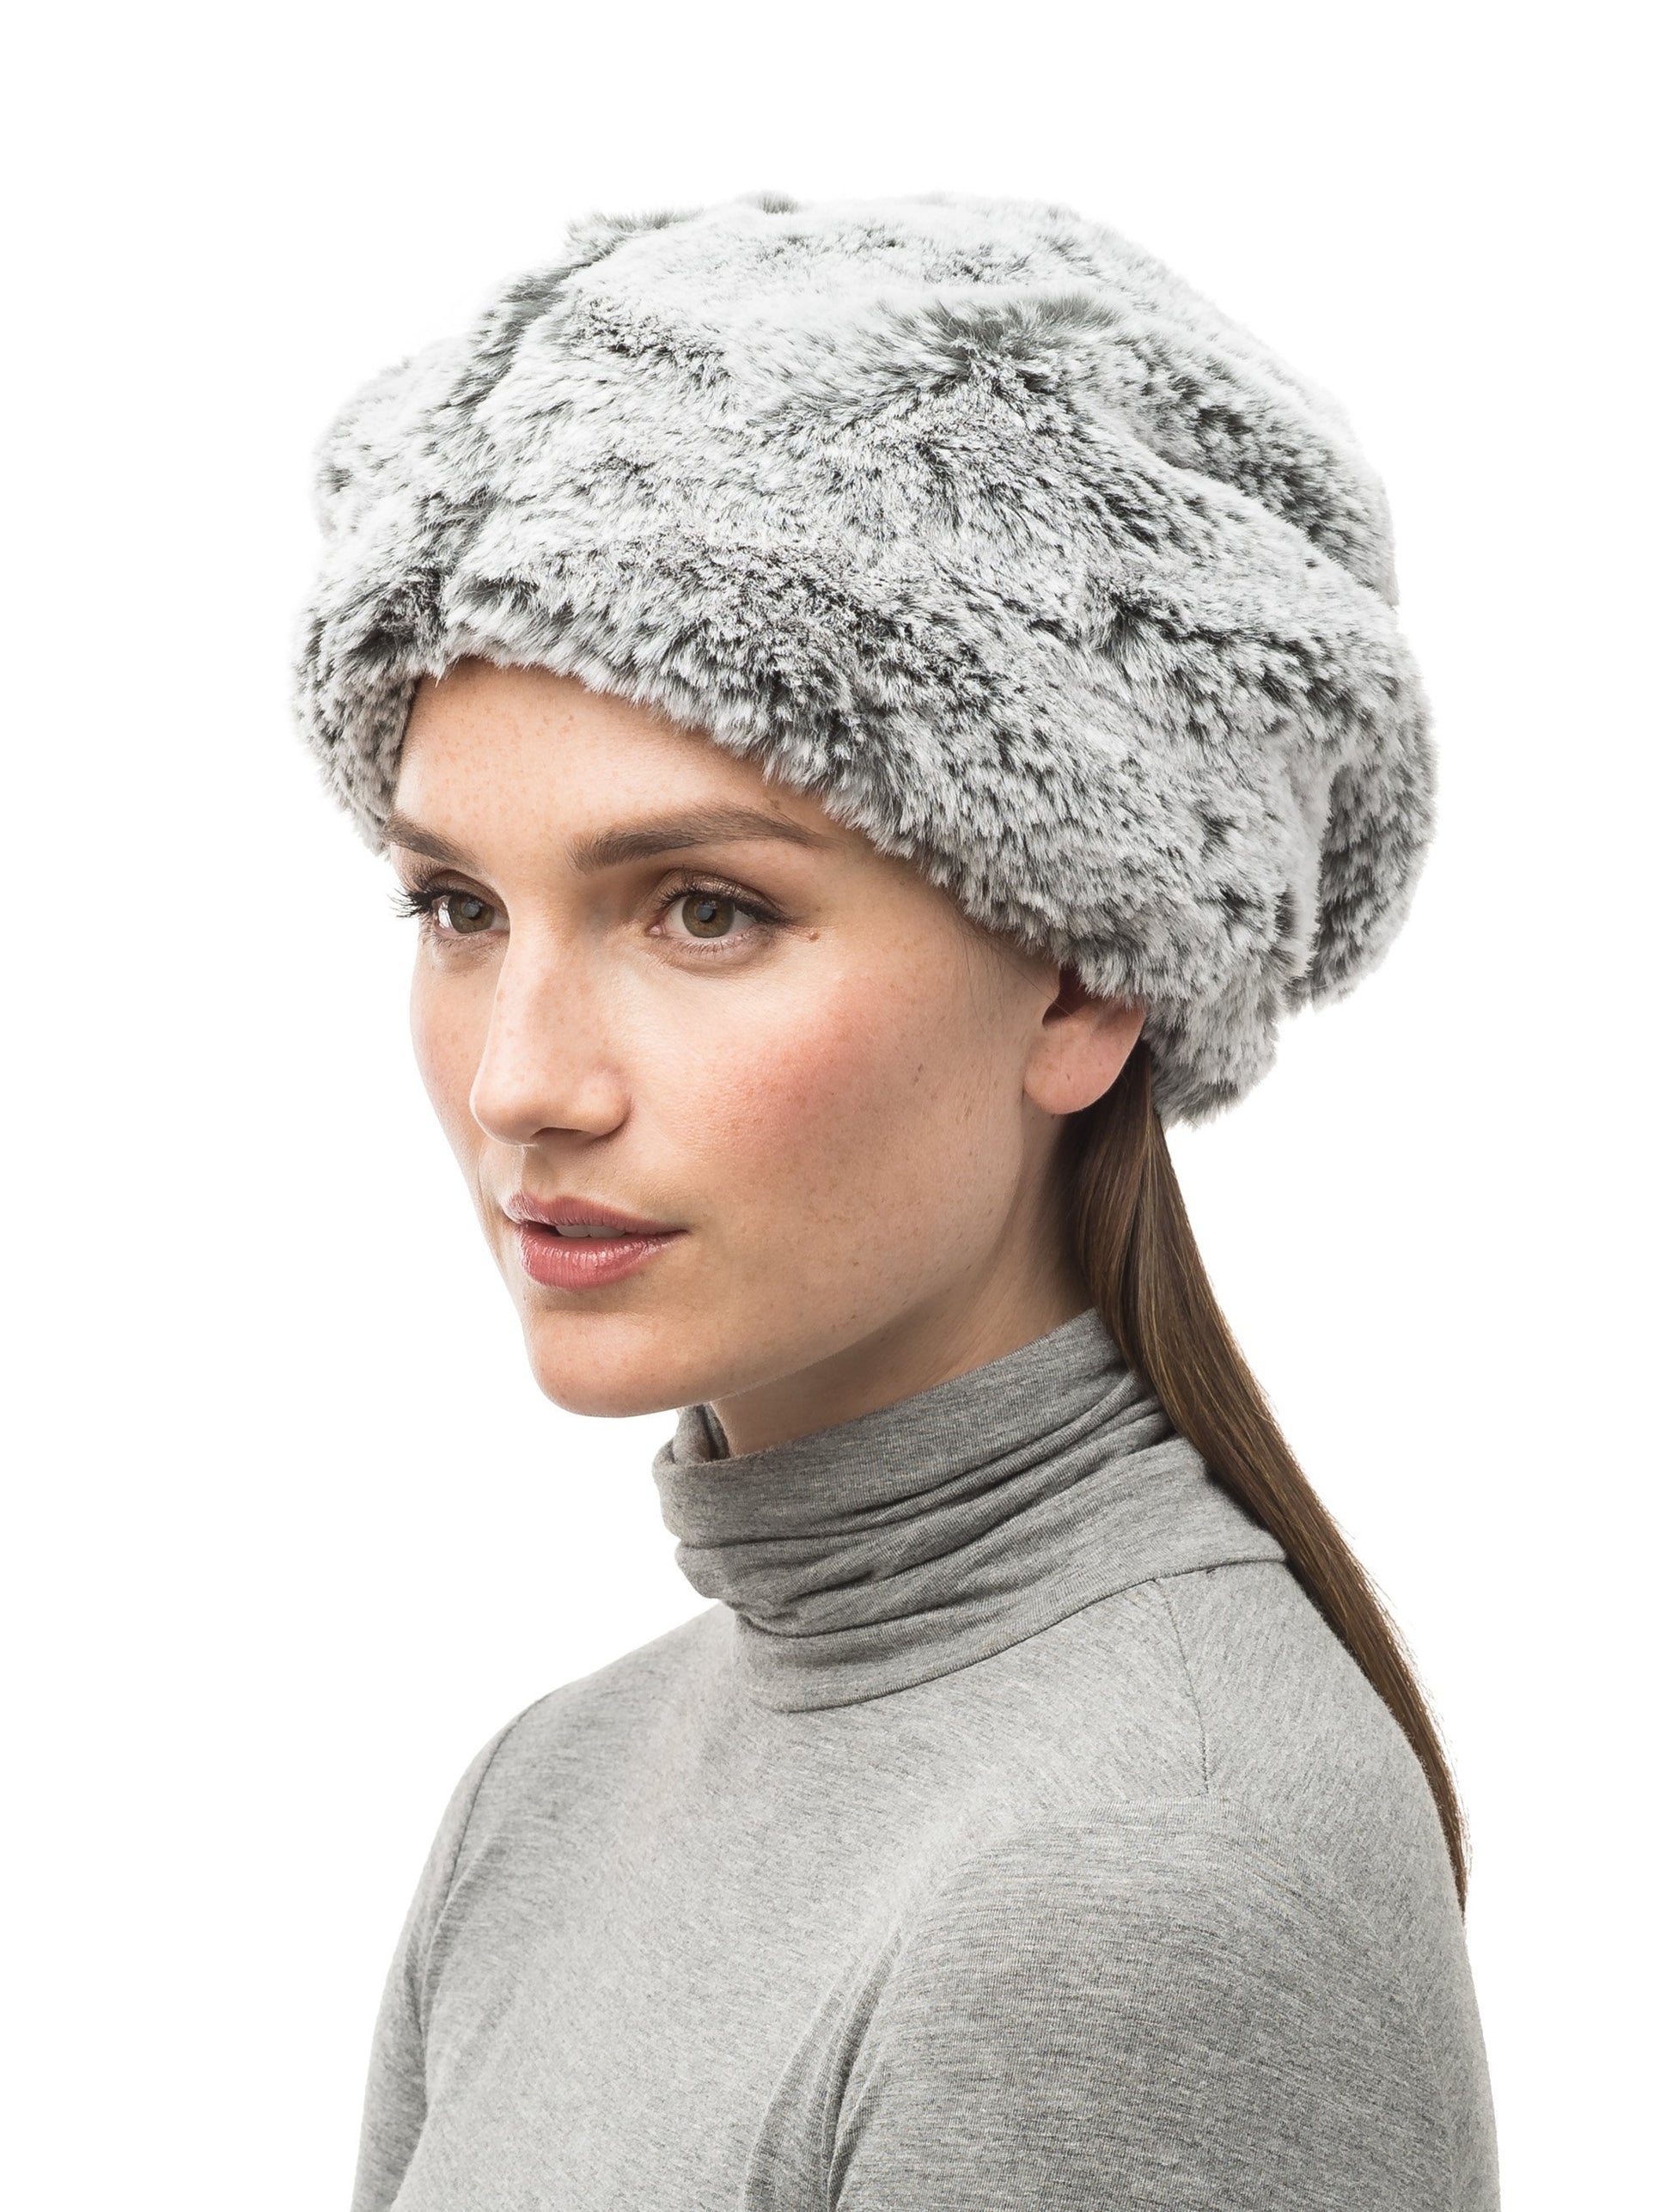 Oversized, slouchy faux fur hat in H Grey